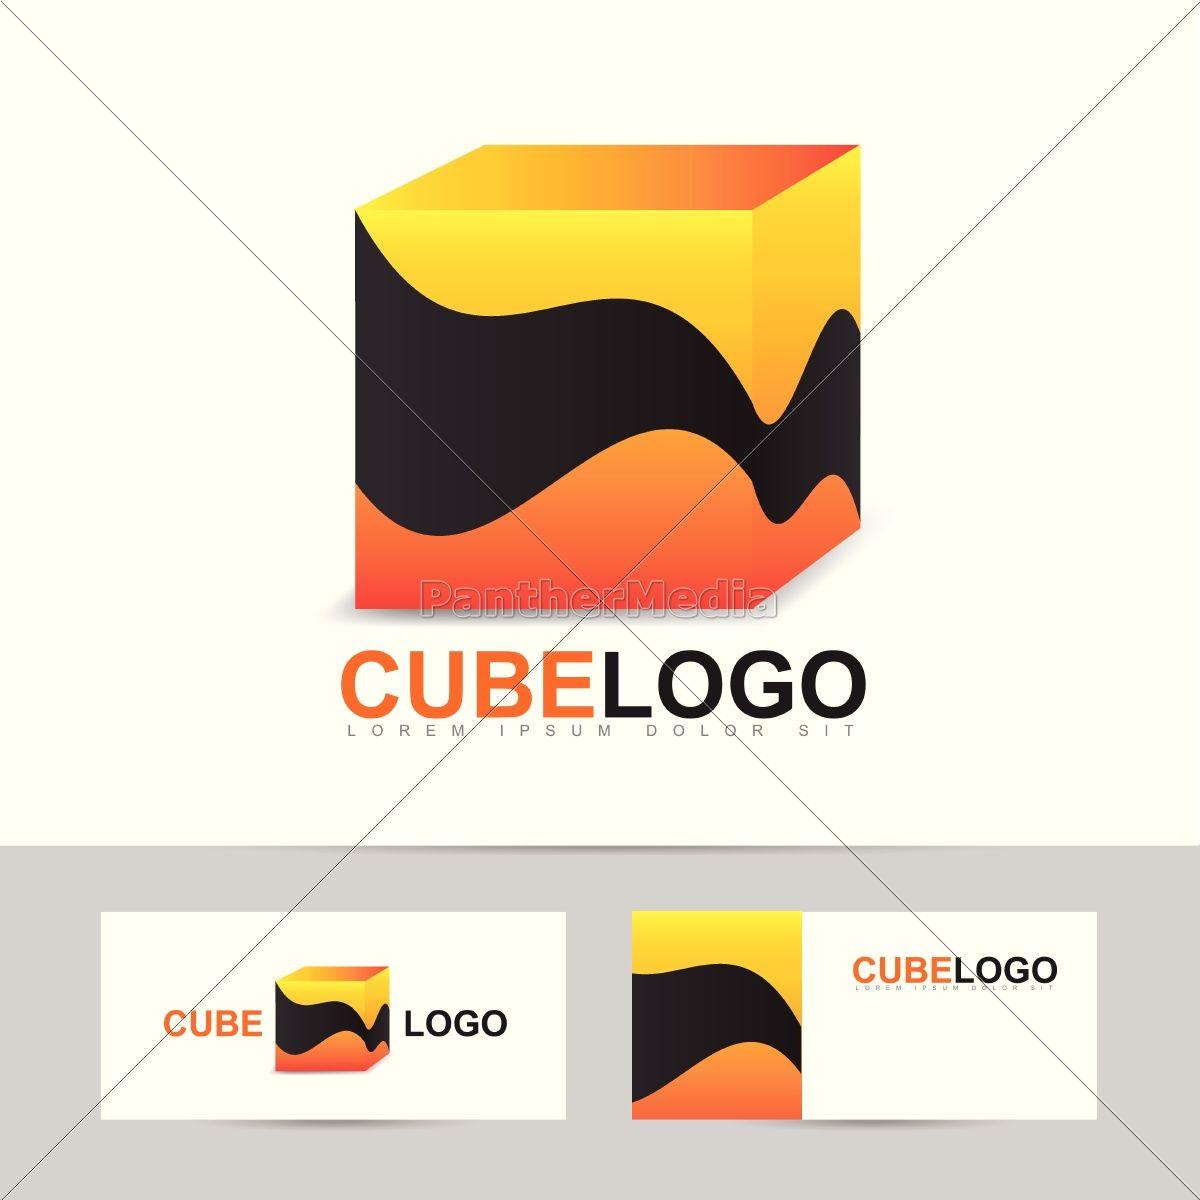 Yellow Cube Logo - Abstract orange cube logo vector - Stock Photo - #13894685 ...